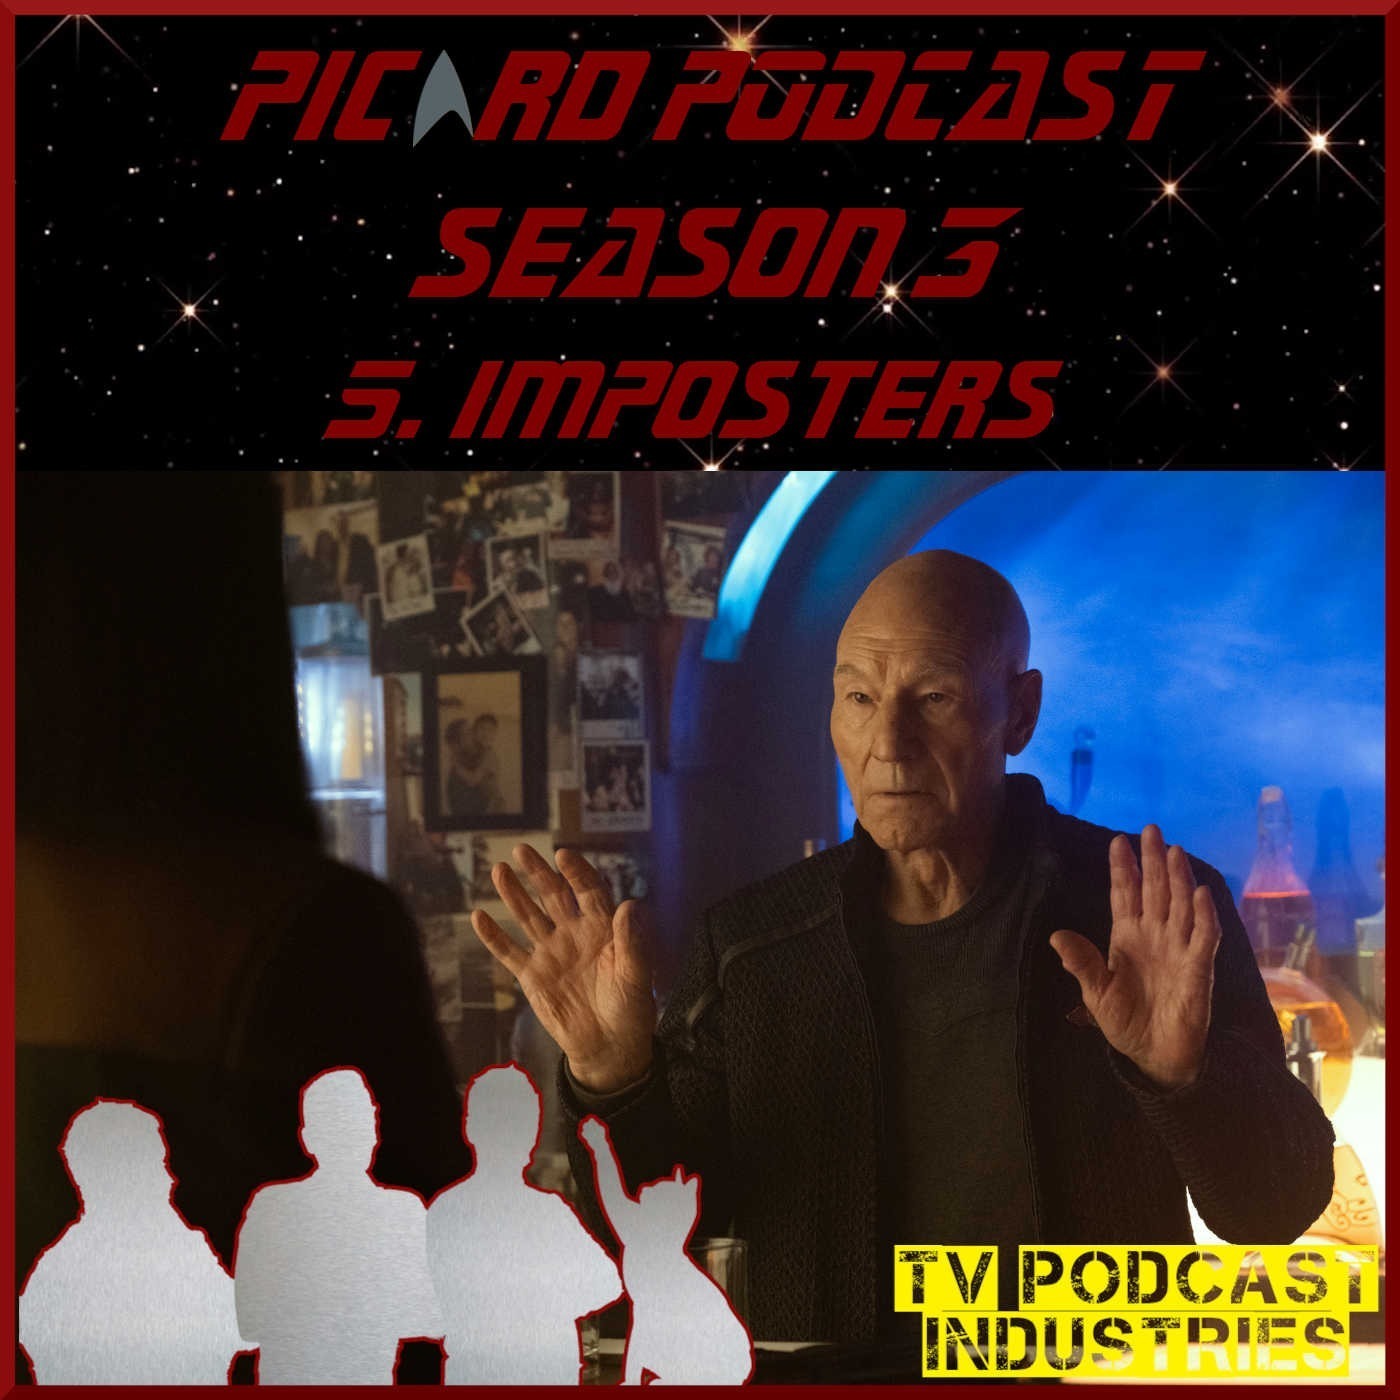 Star Trek Picard 305 ”Imposters” review